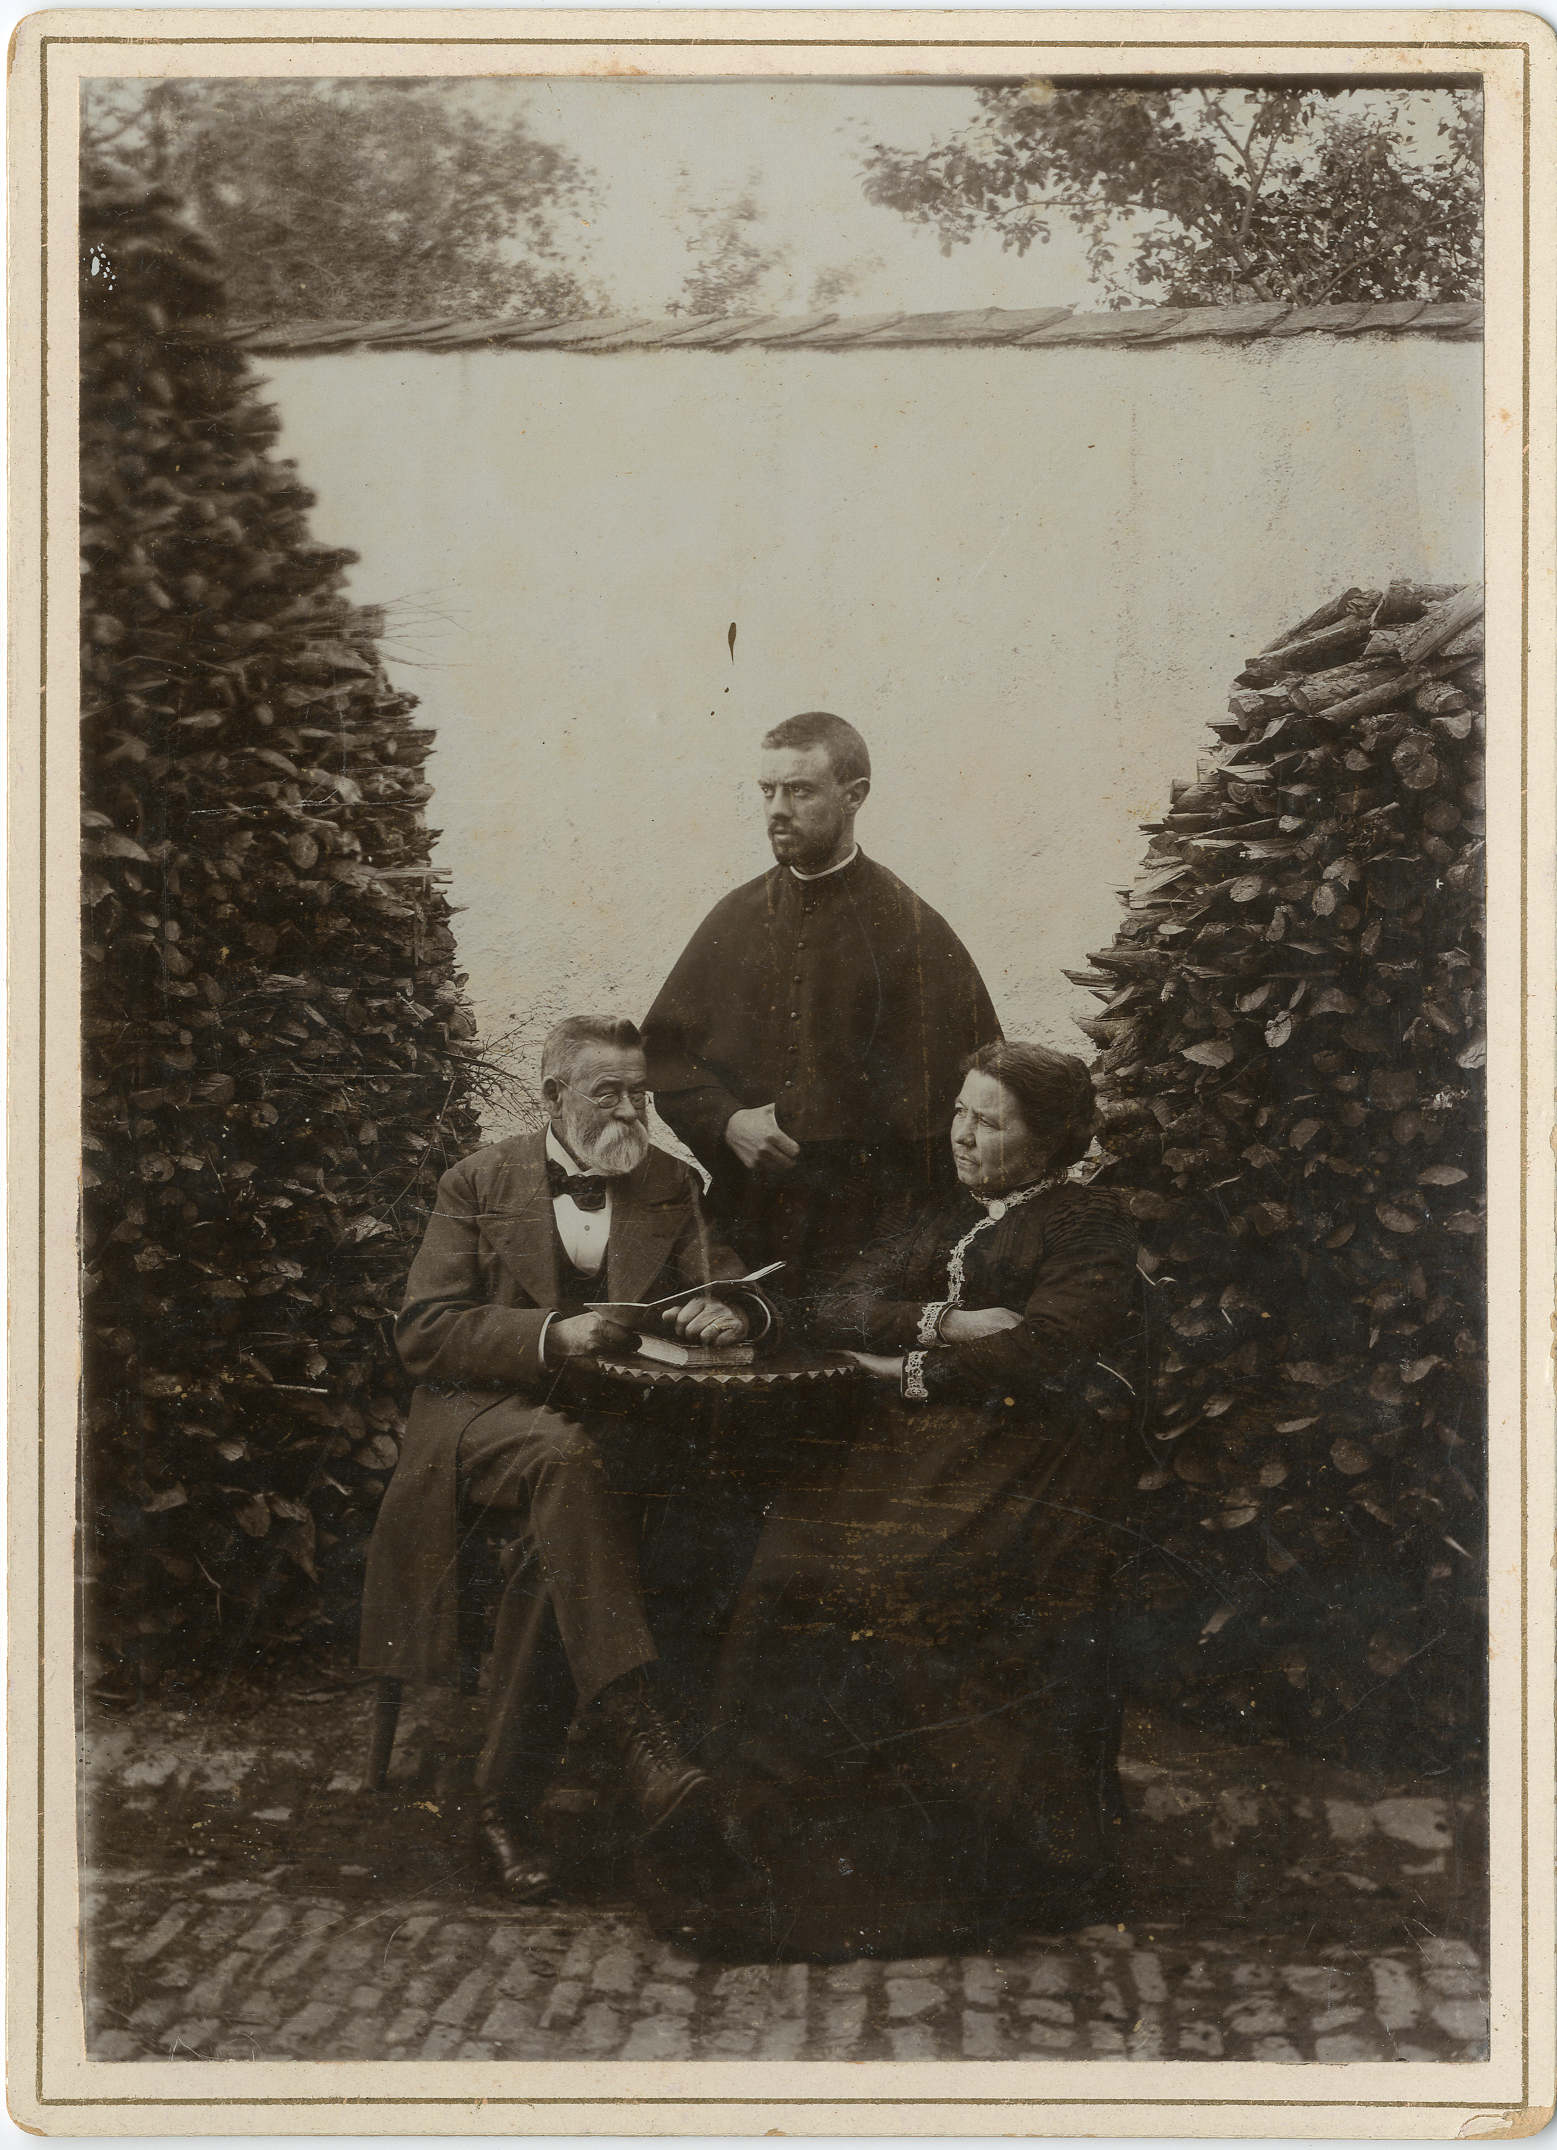 
					
						Adolphe Delvaux mit seinen Eltern
					
					
					© Droits réservés/Alle Rechte vorbehalten
					